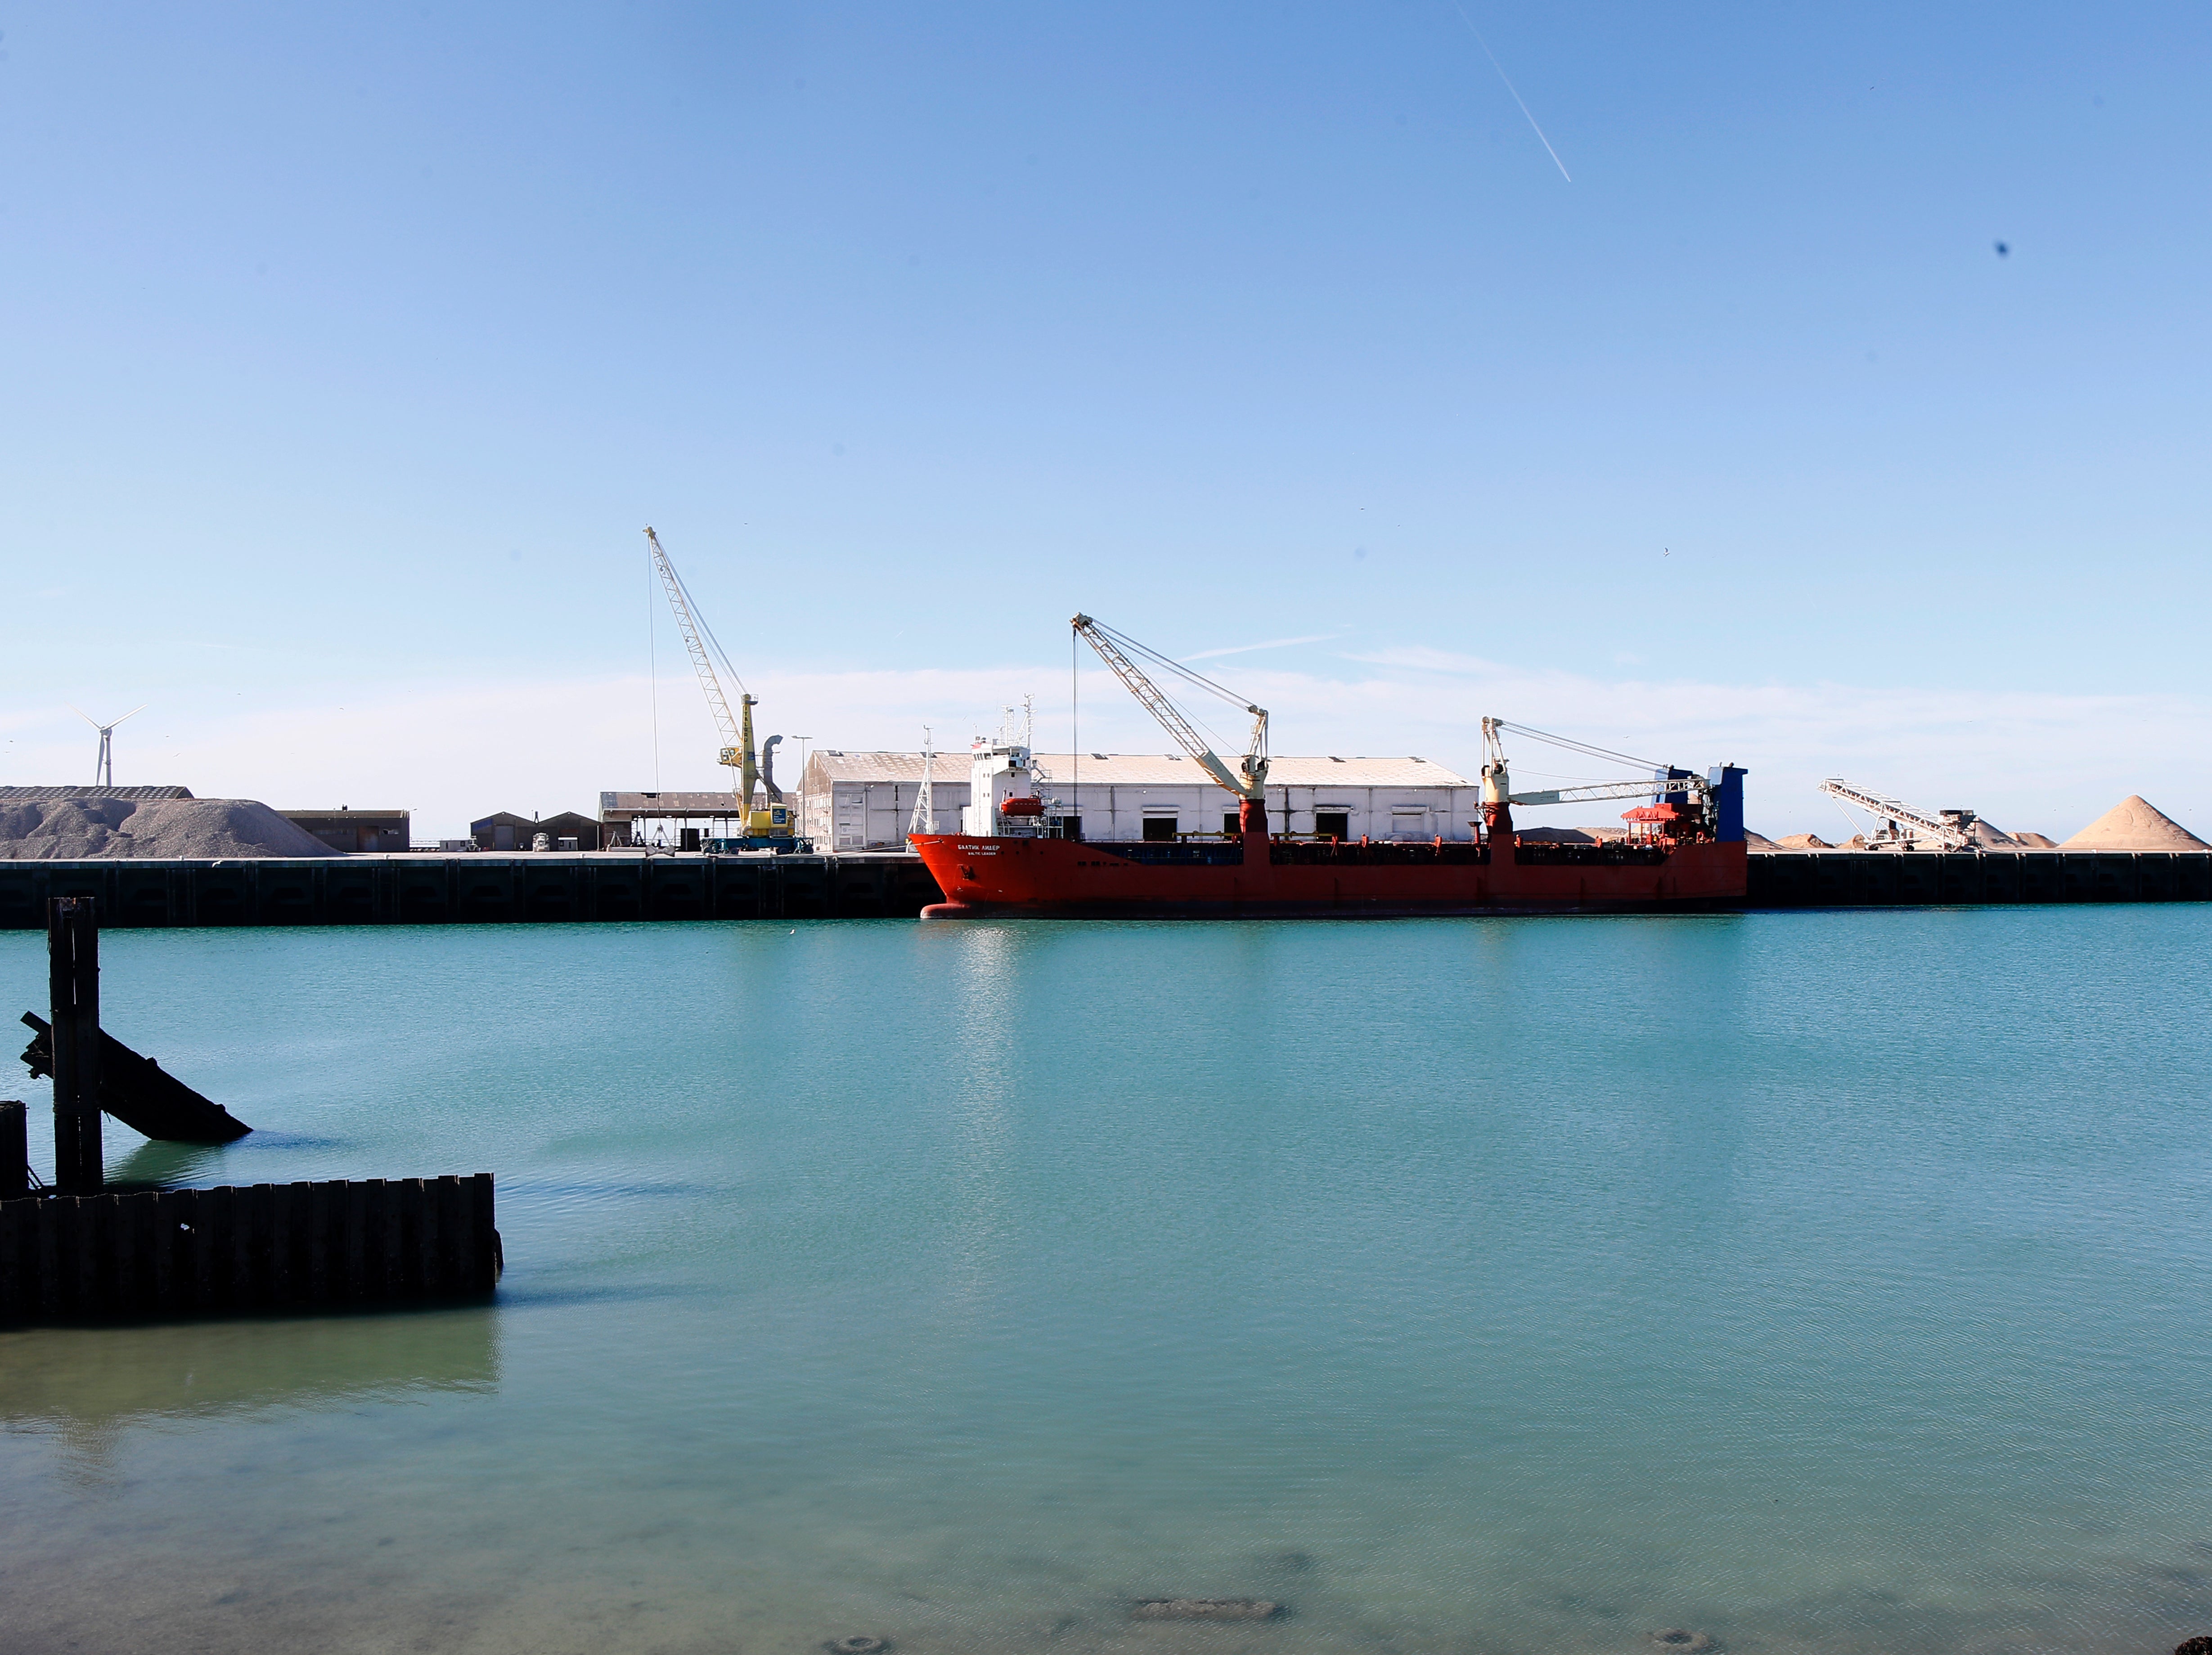 Baltic Leader docks in the port of Boulogne-sur-Mer, northern France